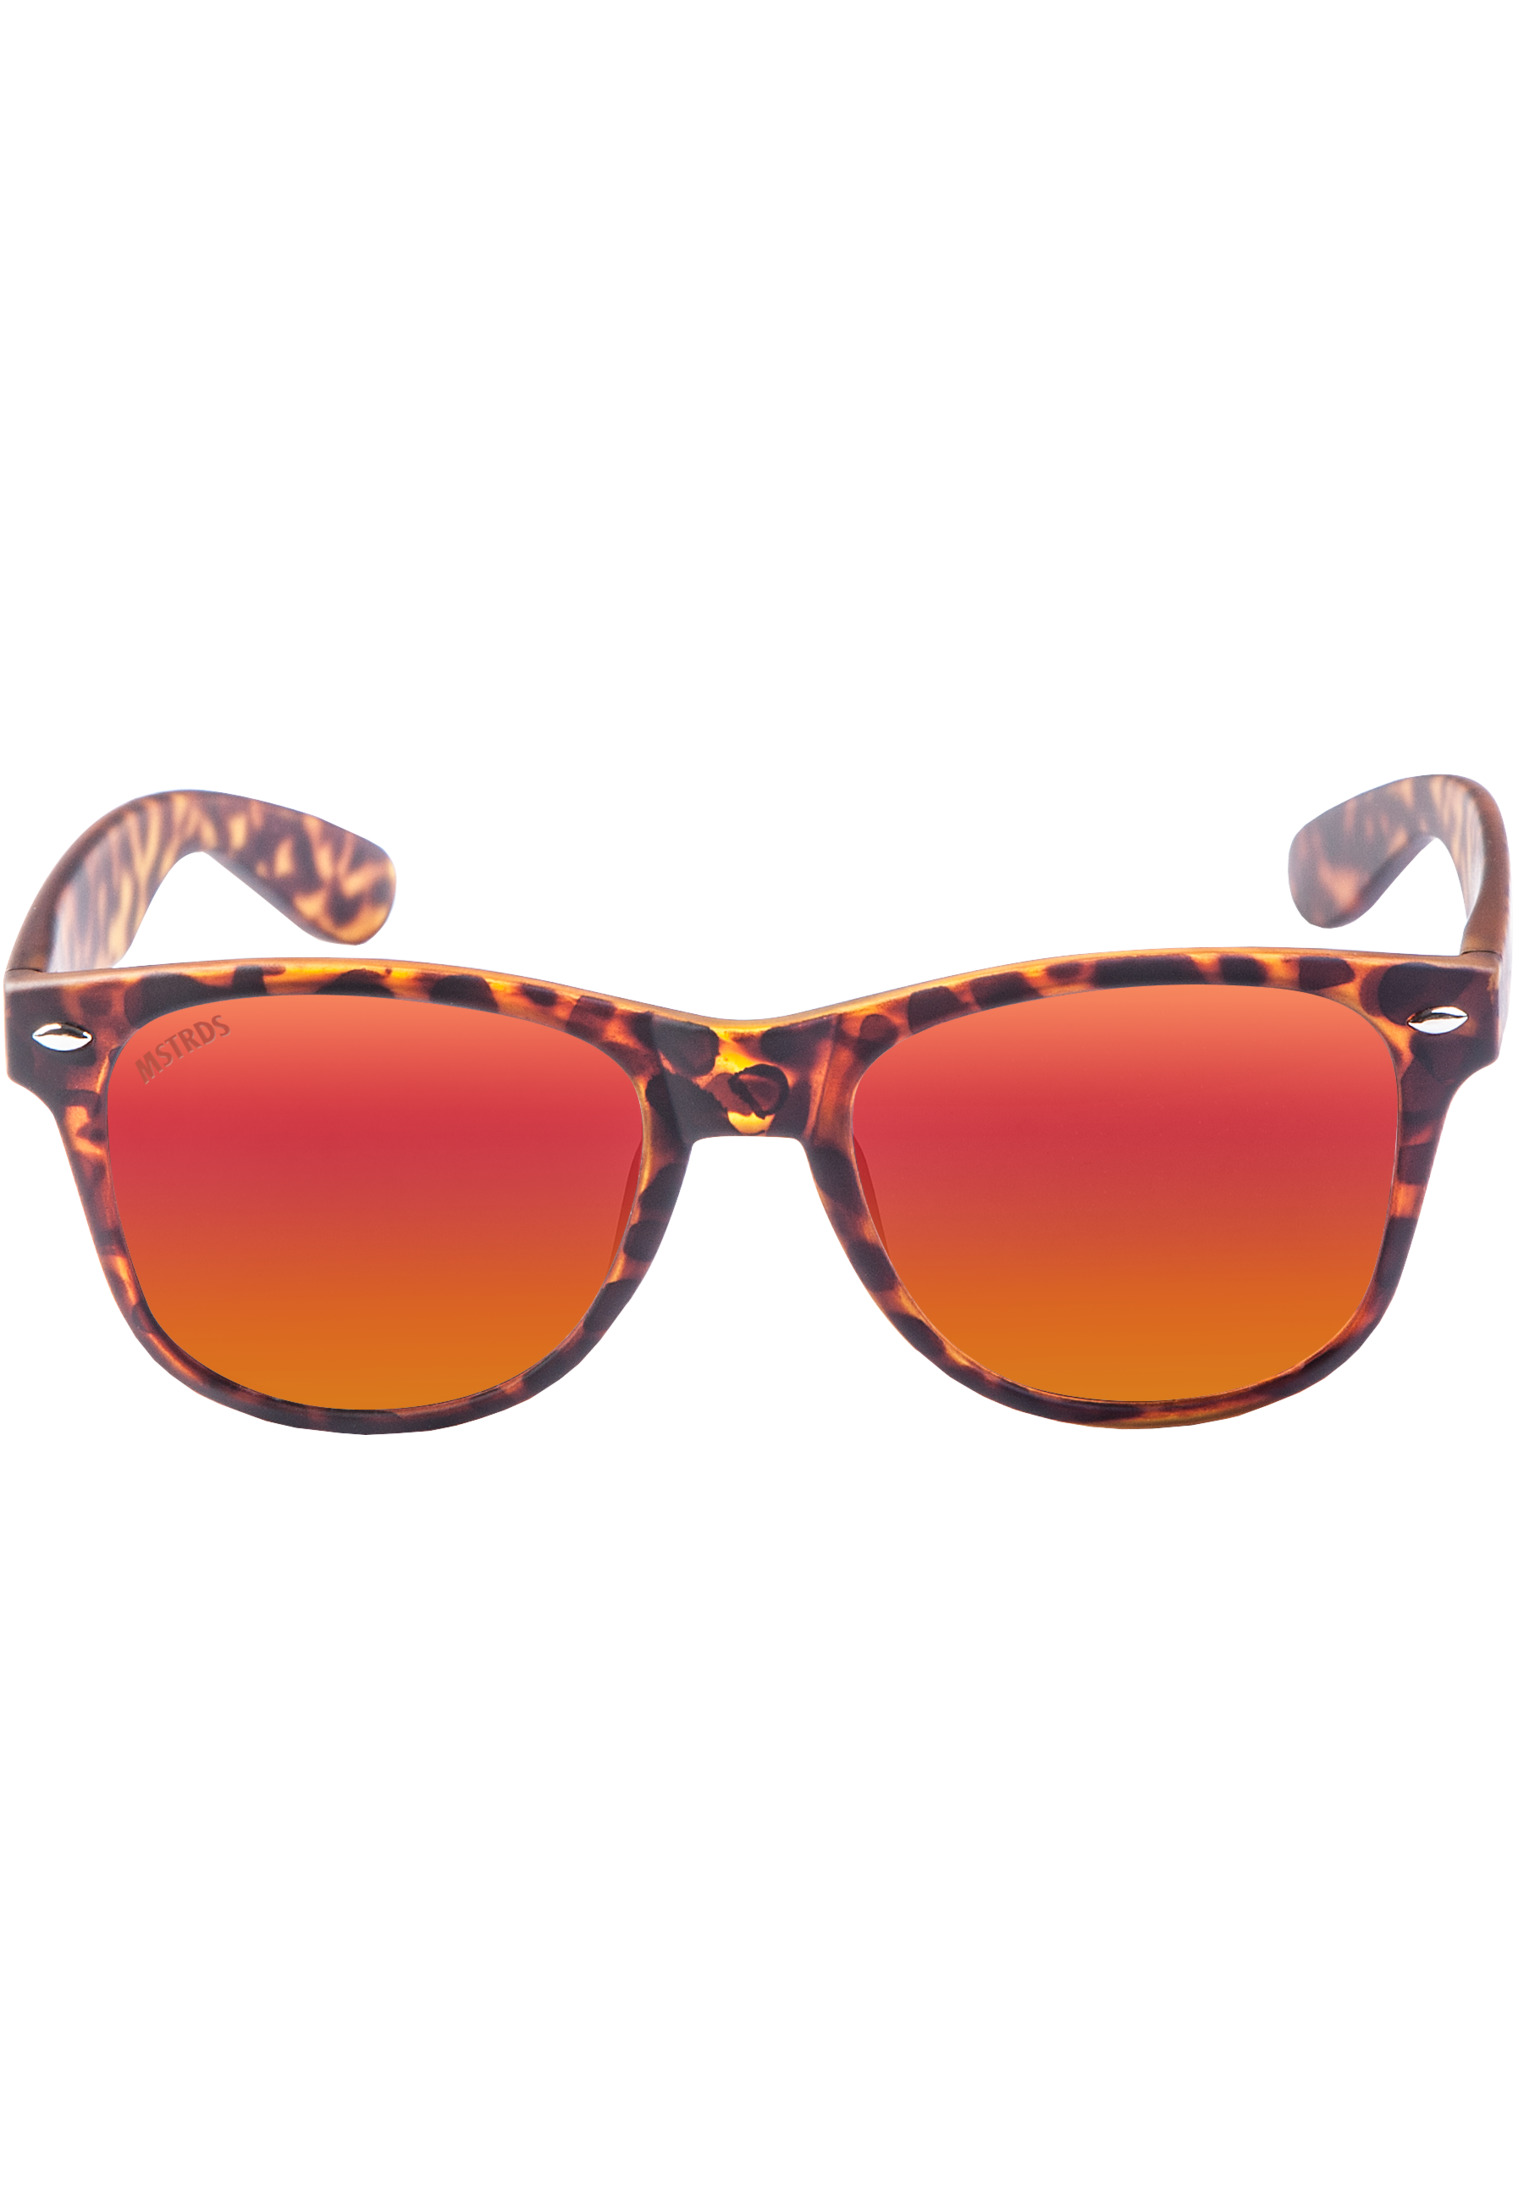 Sunglasses Likoma Youth havanna/red